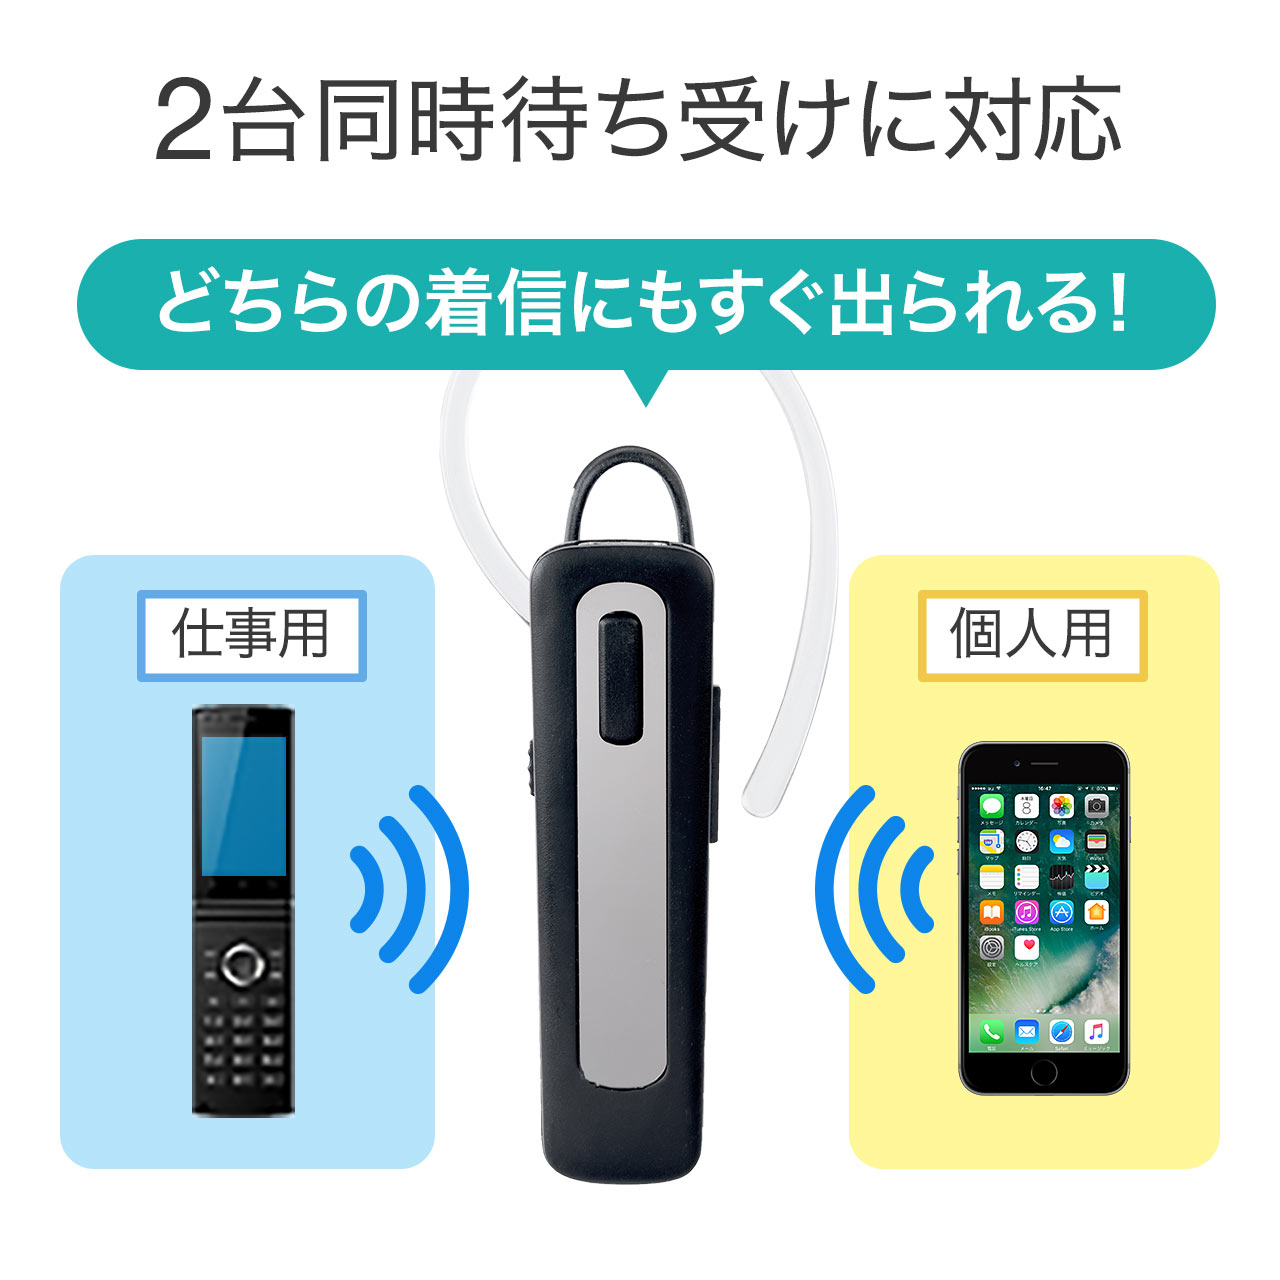 Bluetoothイヤホン(Bluetoothモノラルヘッドホン・片耳・音楽/通話対応・2台同時待ち受け) 400-BTMH005BK